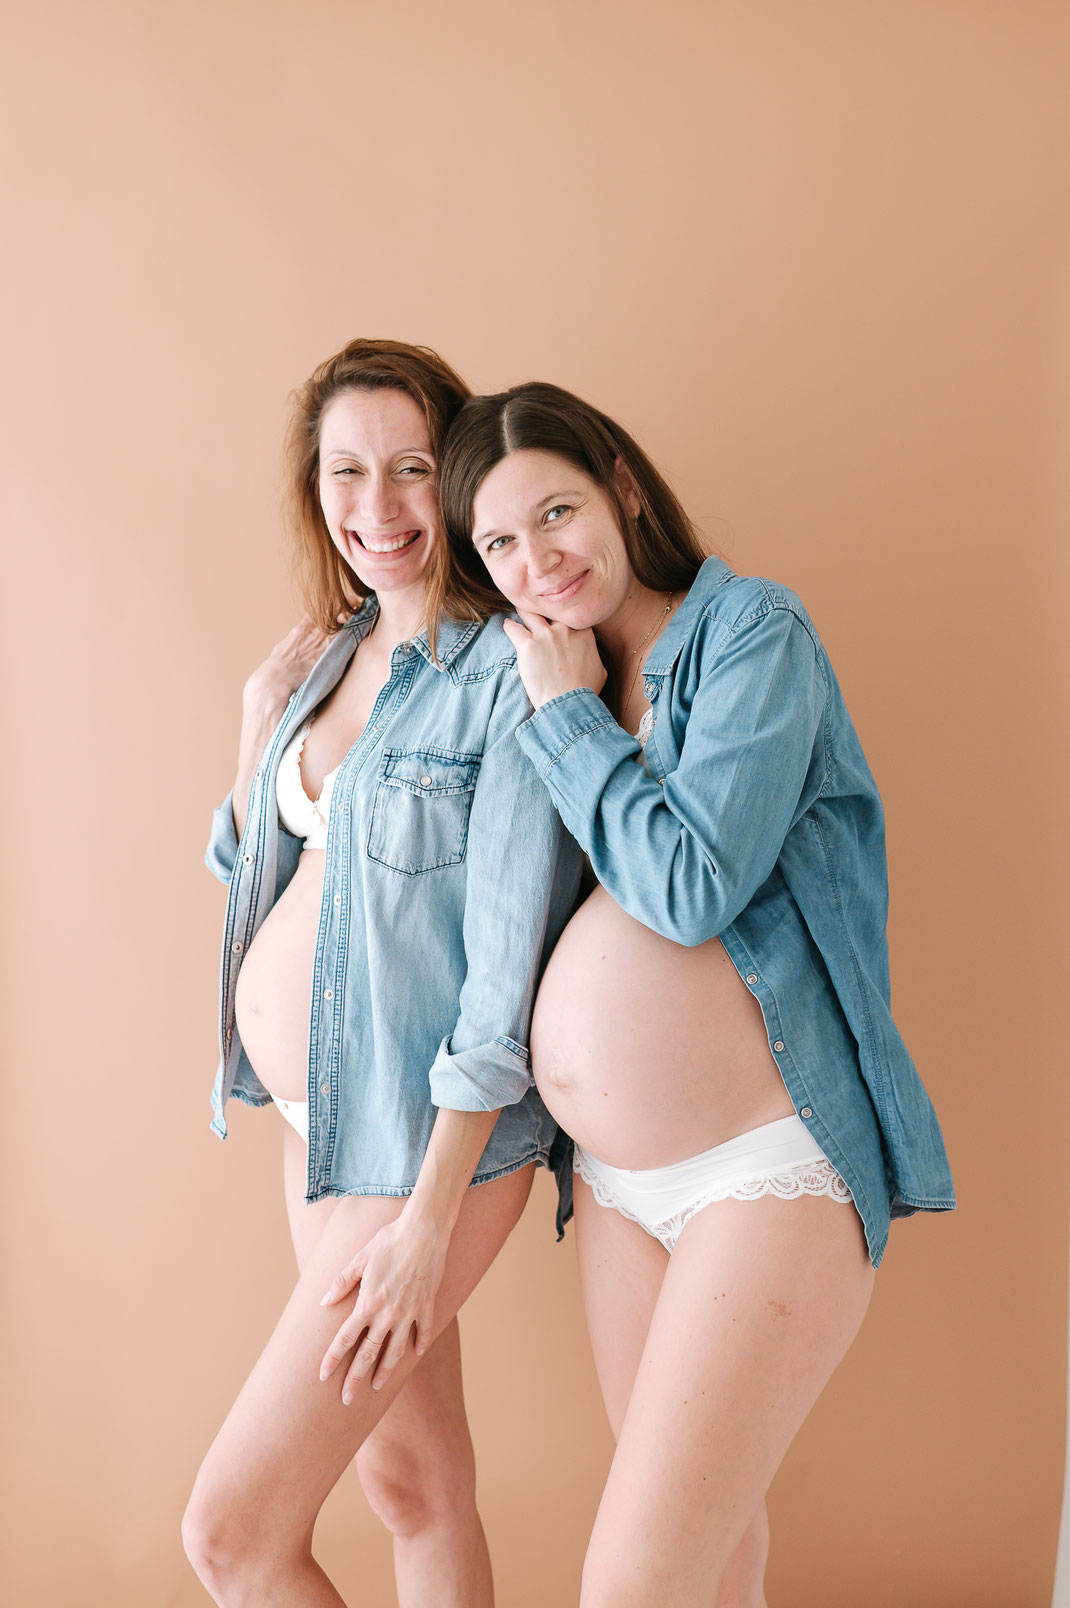 photographe brignoles seance photo grossesse studio photo naturelle shooting grossesse naturel couple femme enceinte future maman